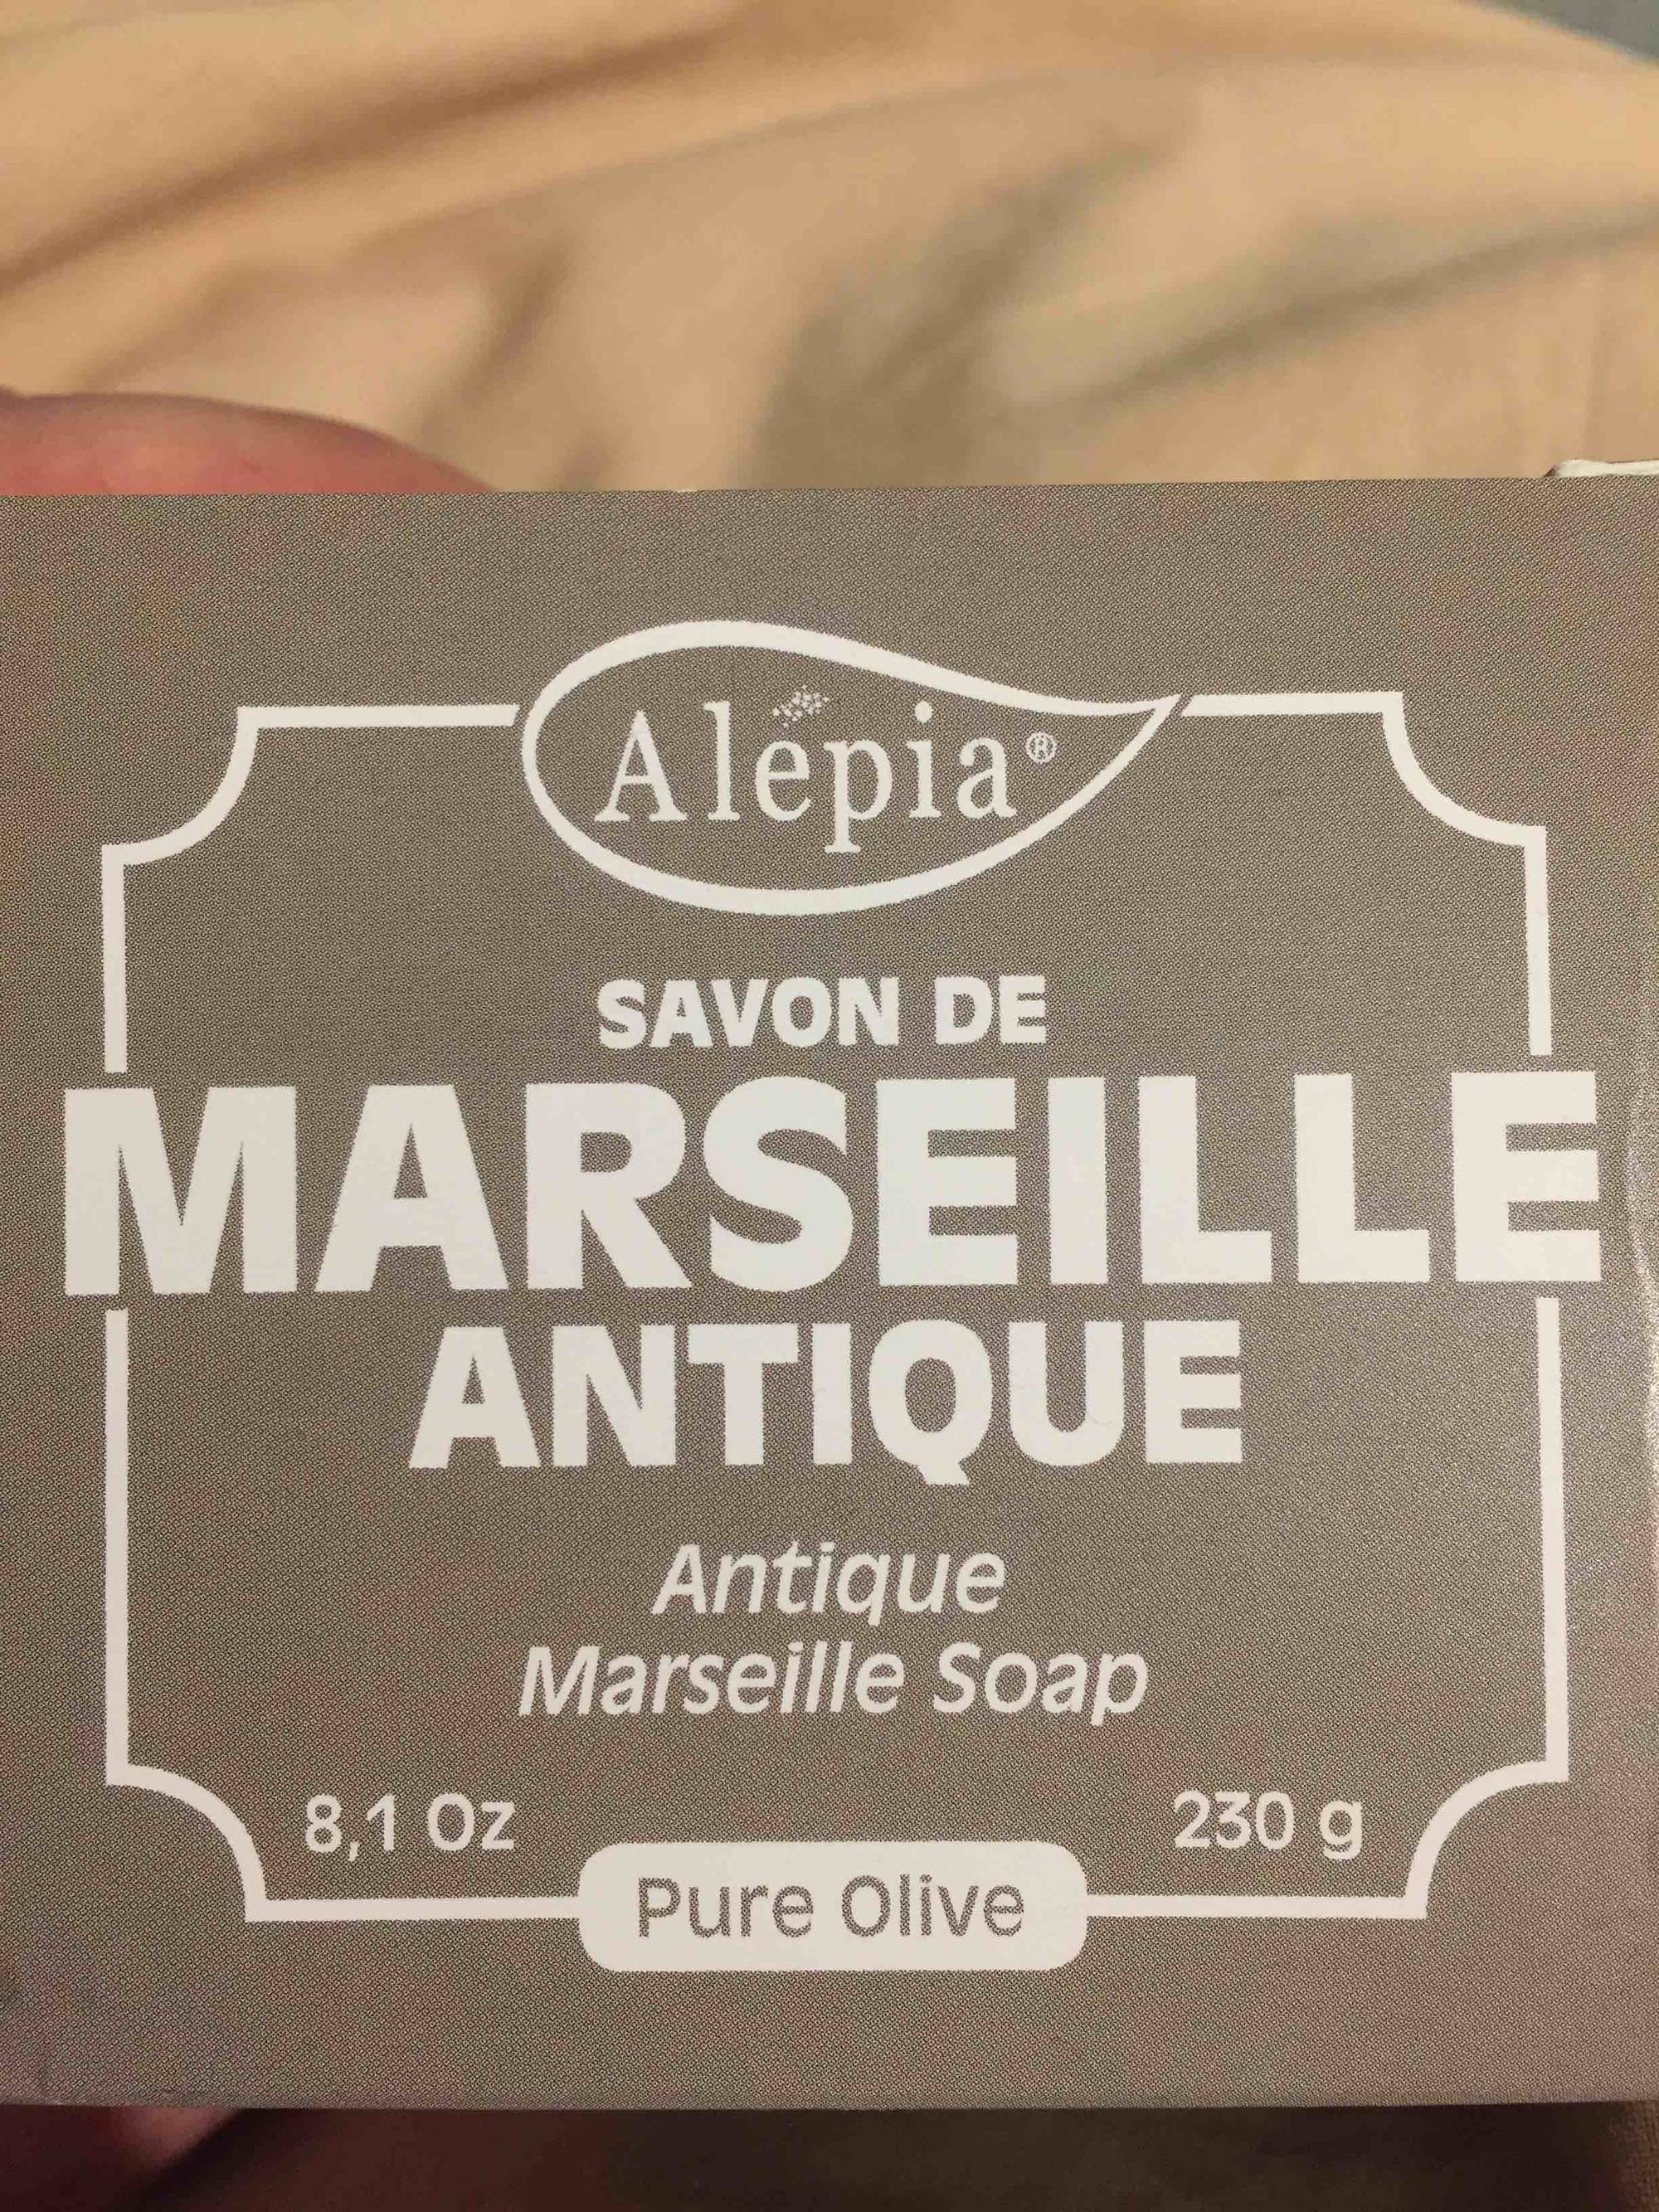 ALEPIA - Pure olive - Savon de Marseille antique